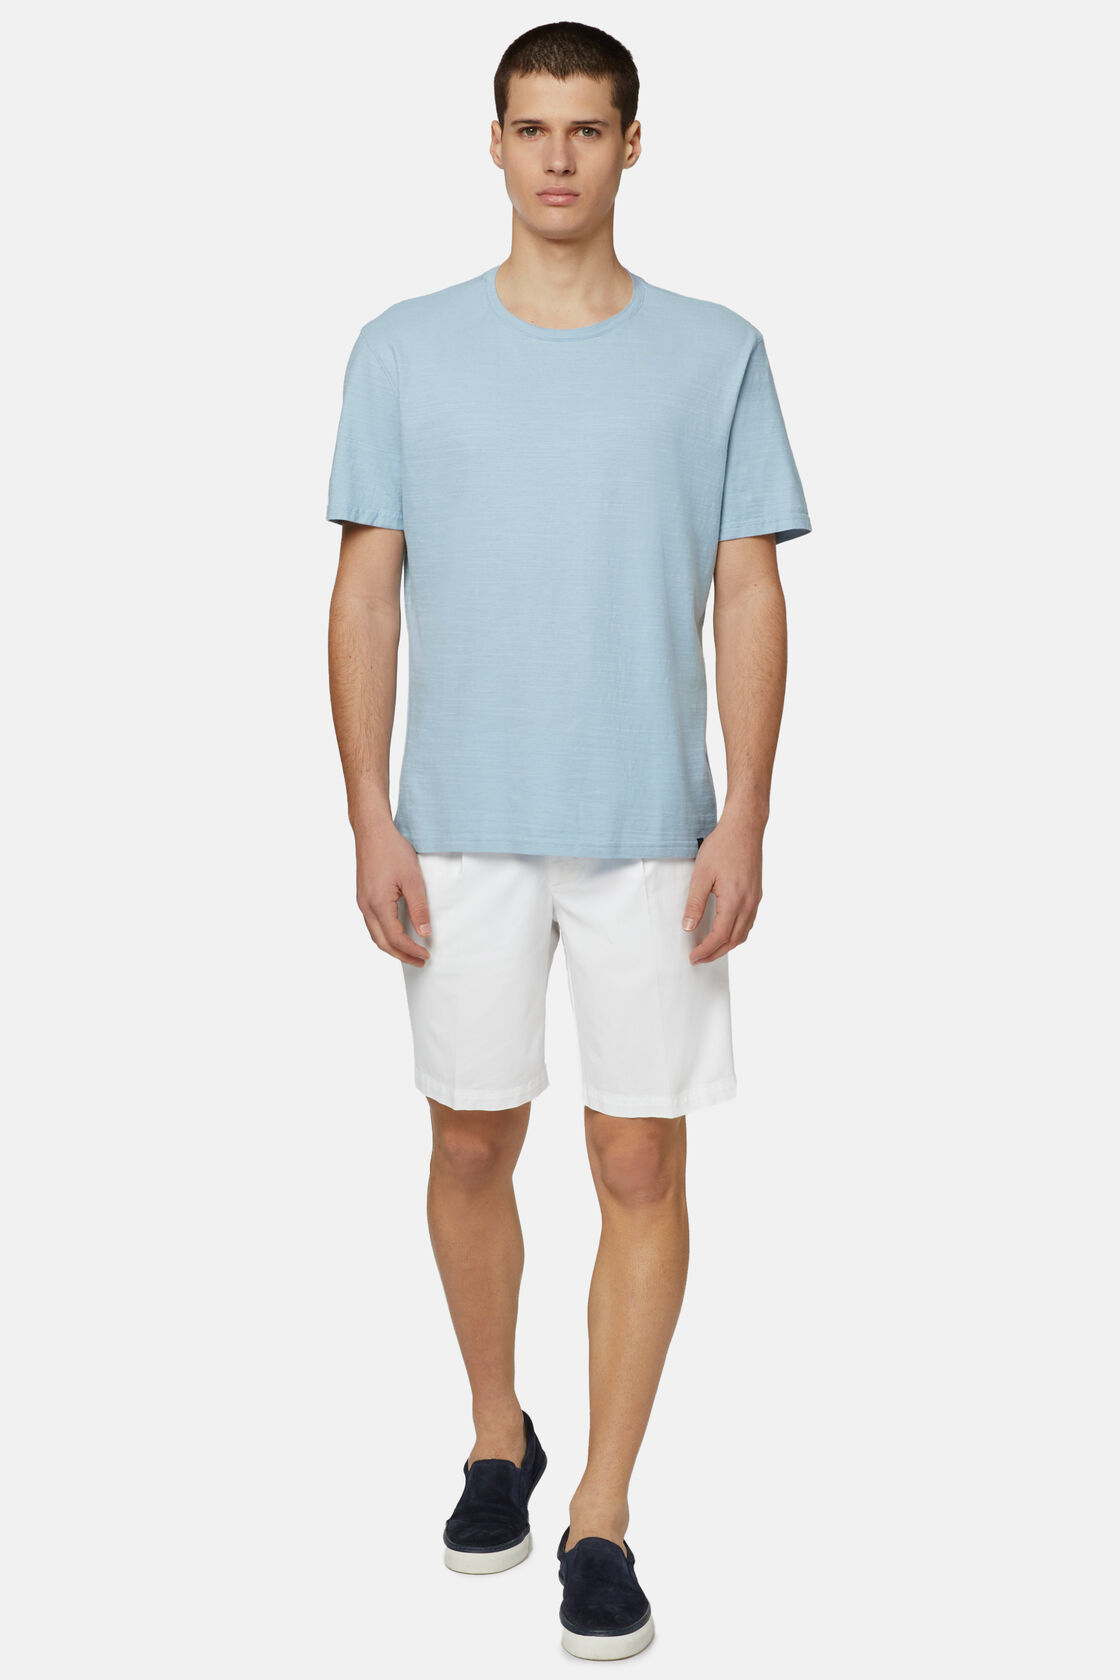 T-Shirt in Cotton Slub Jersey, Light Blu, hi-res